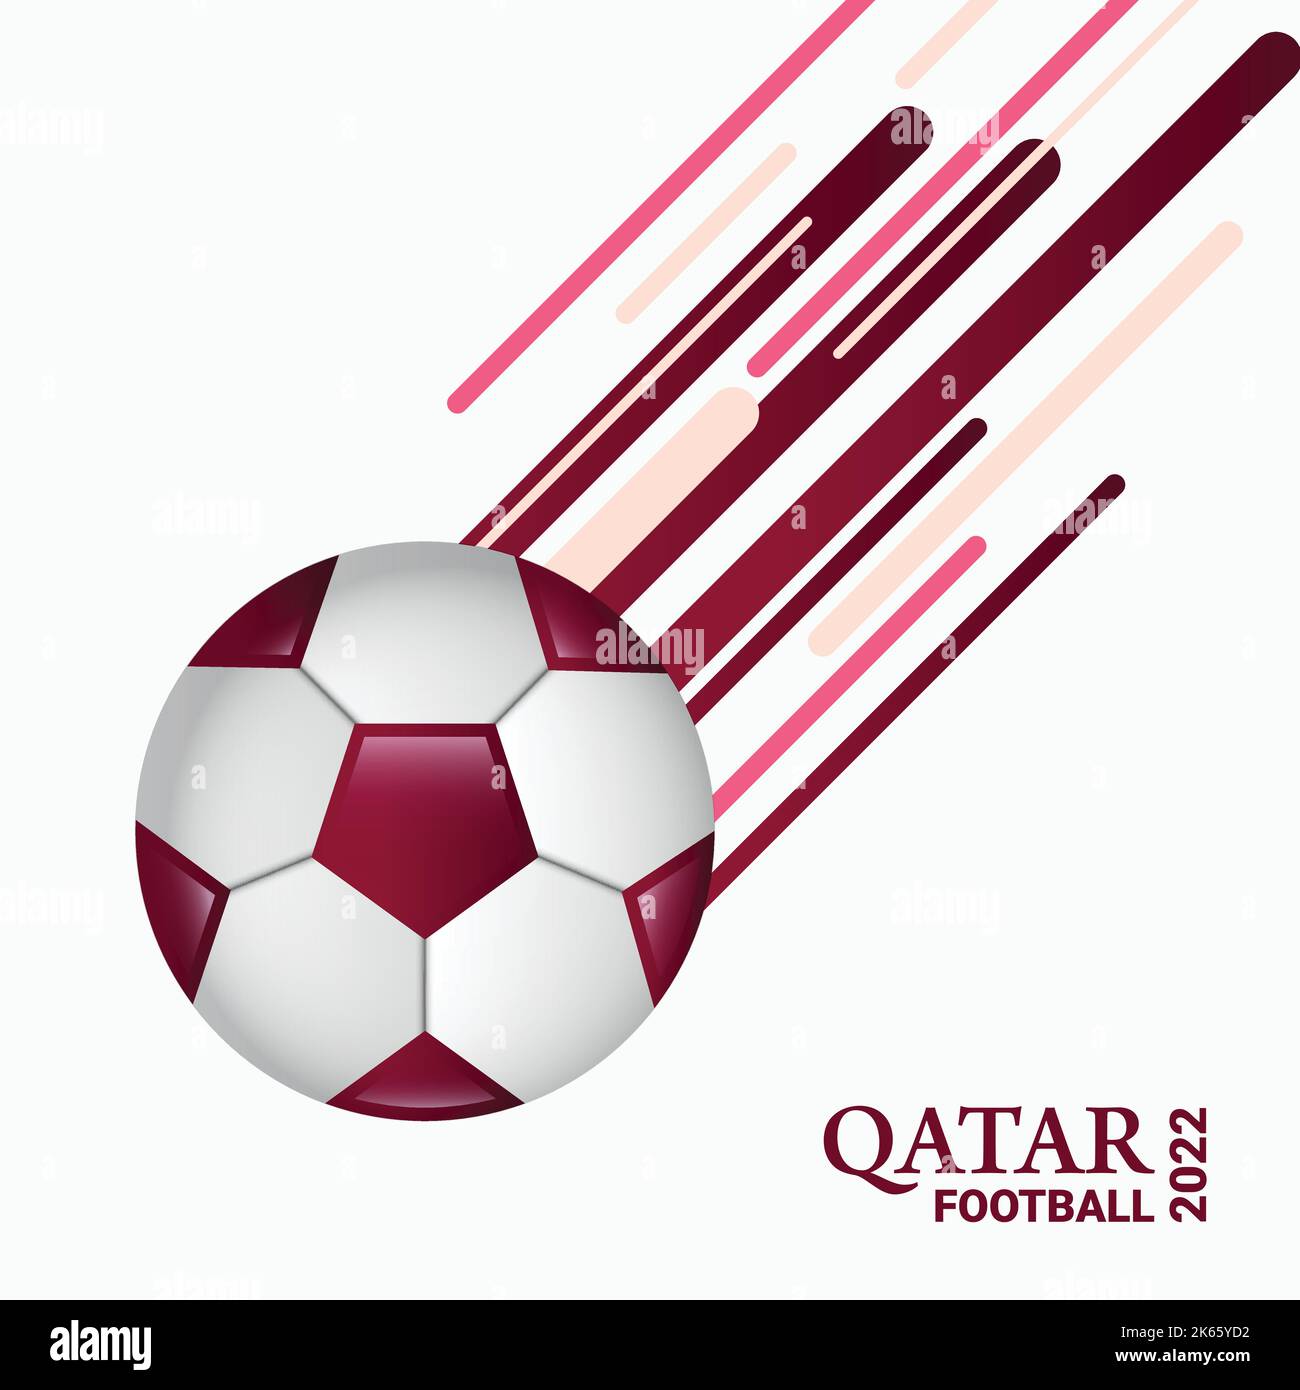 FIFA World Cup Footballs and Logos in Vector - Creative Alys